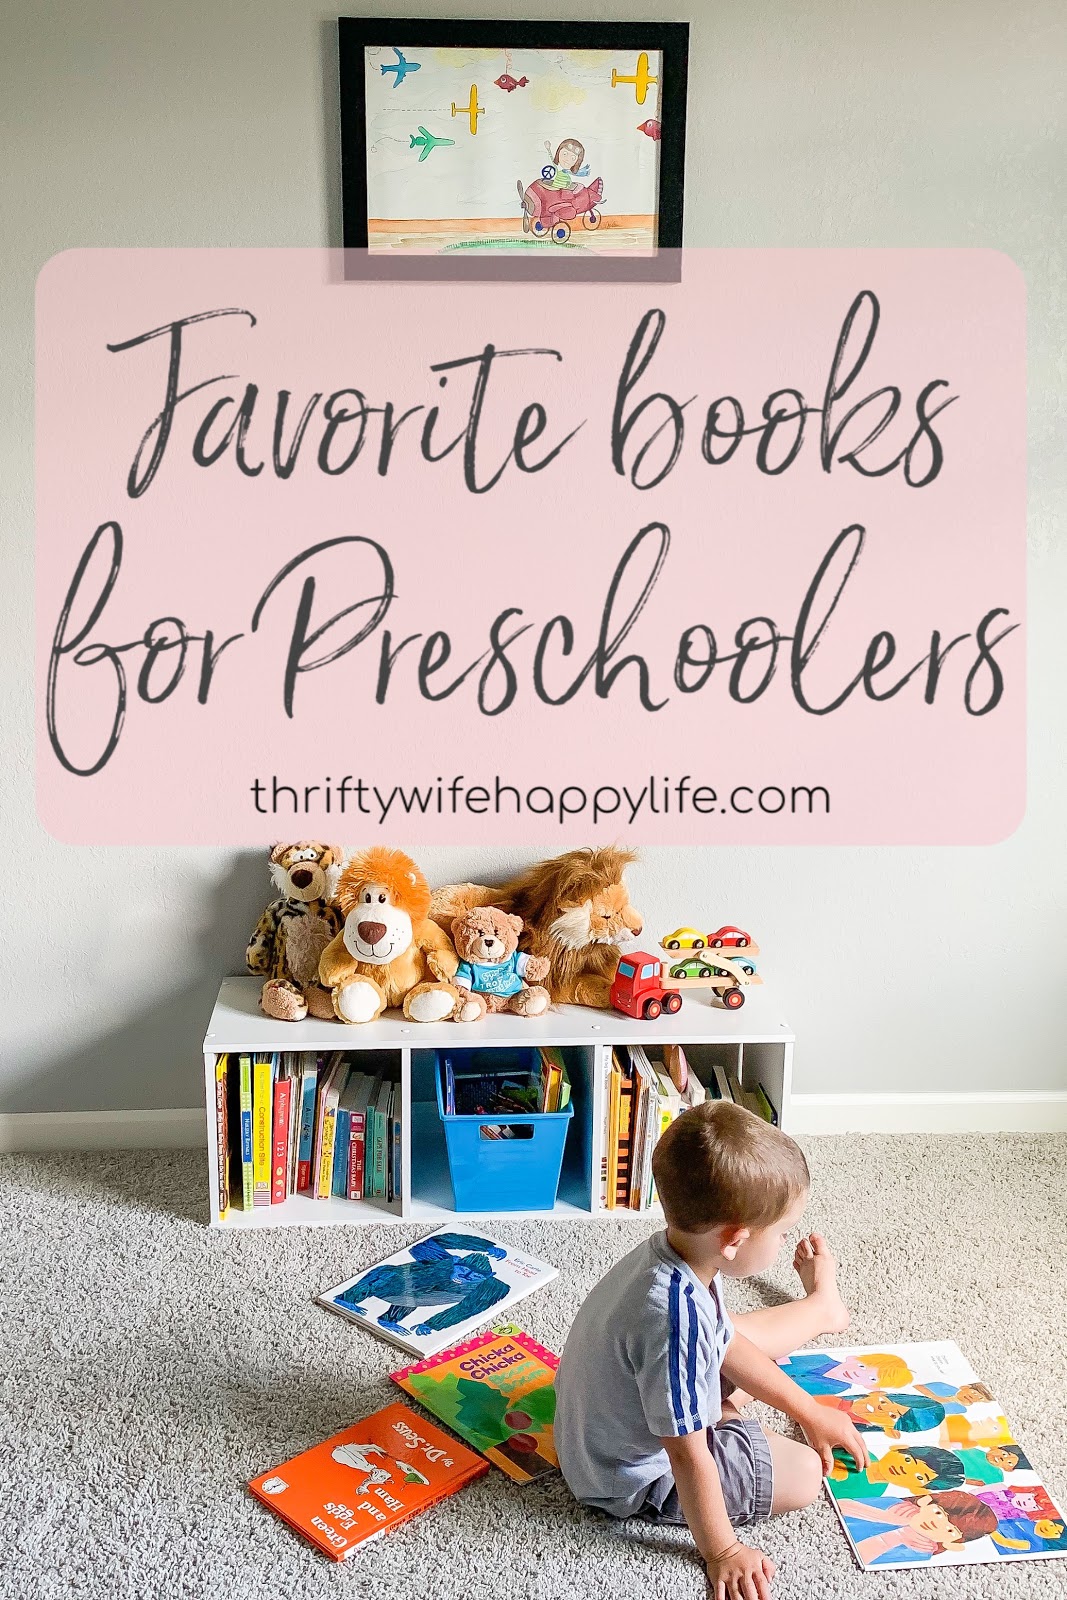 10 favorite books for preschoolers